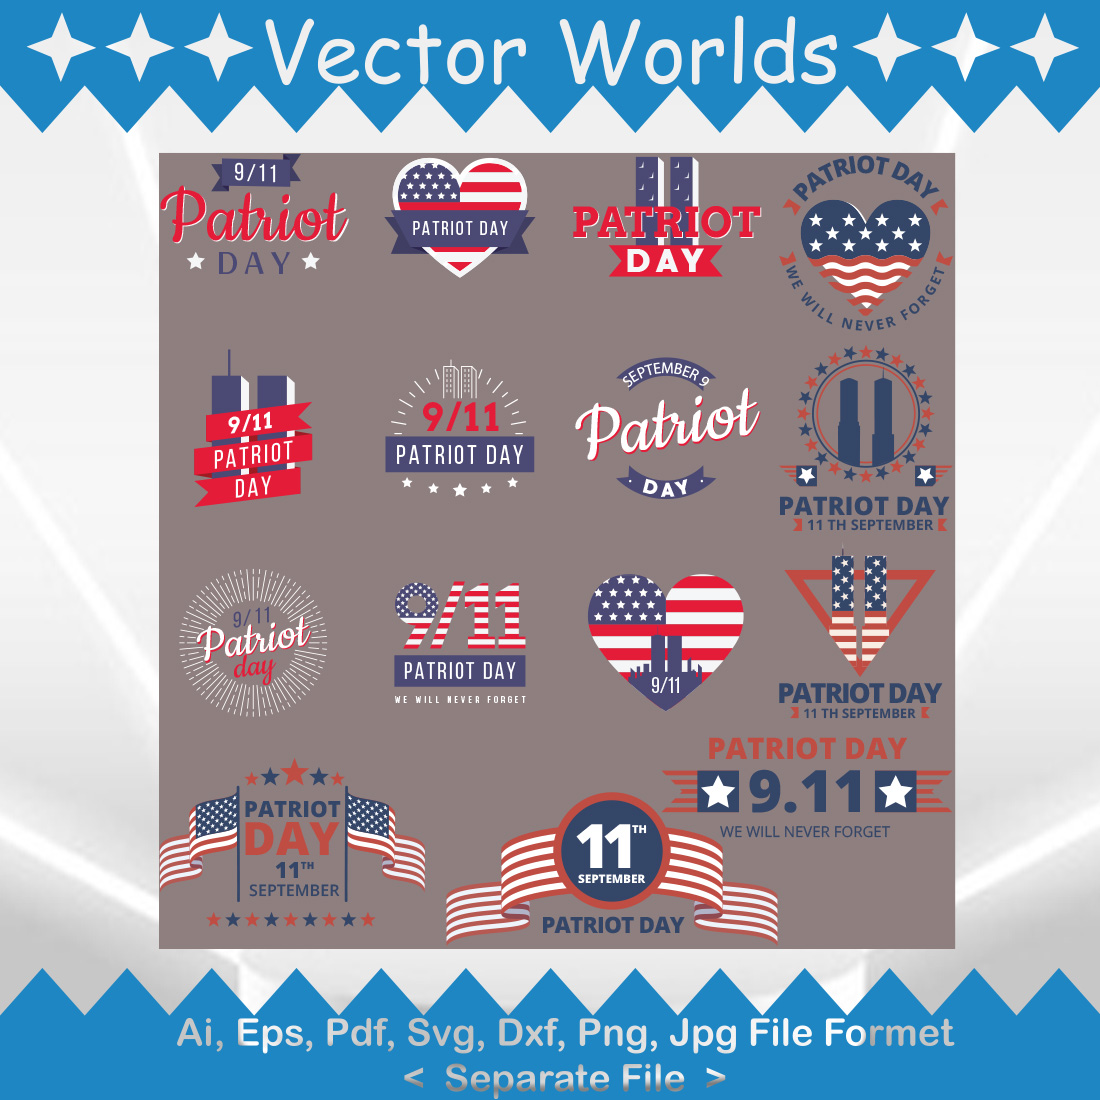 Happy Patriot Day SVG Vector Design cover image.